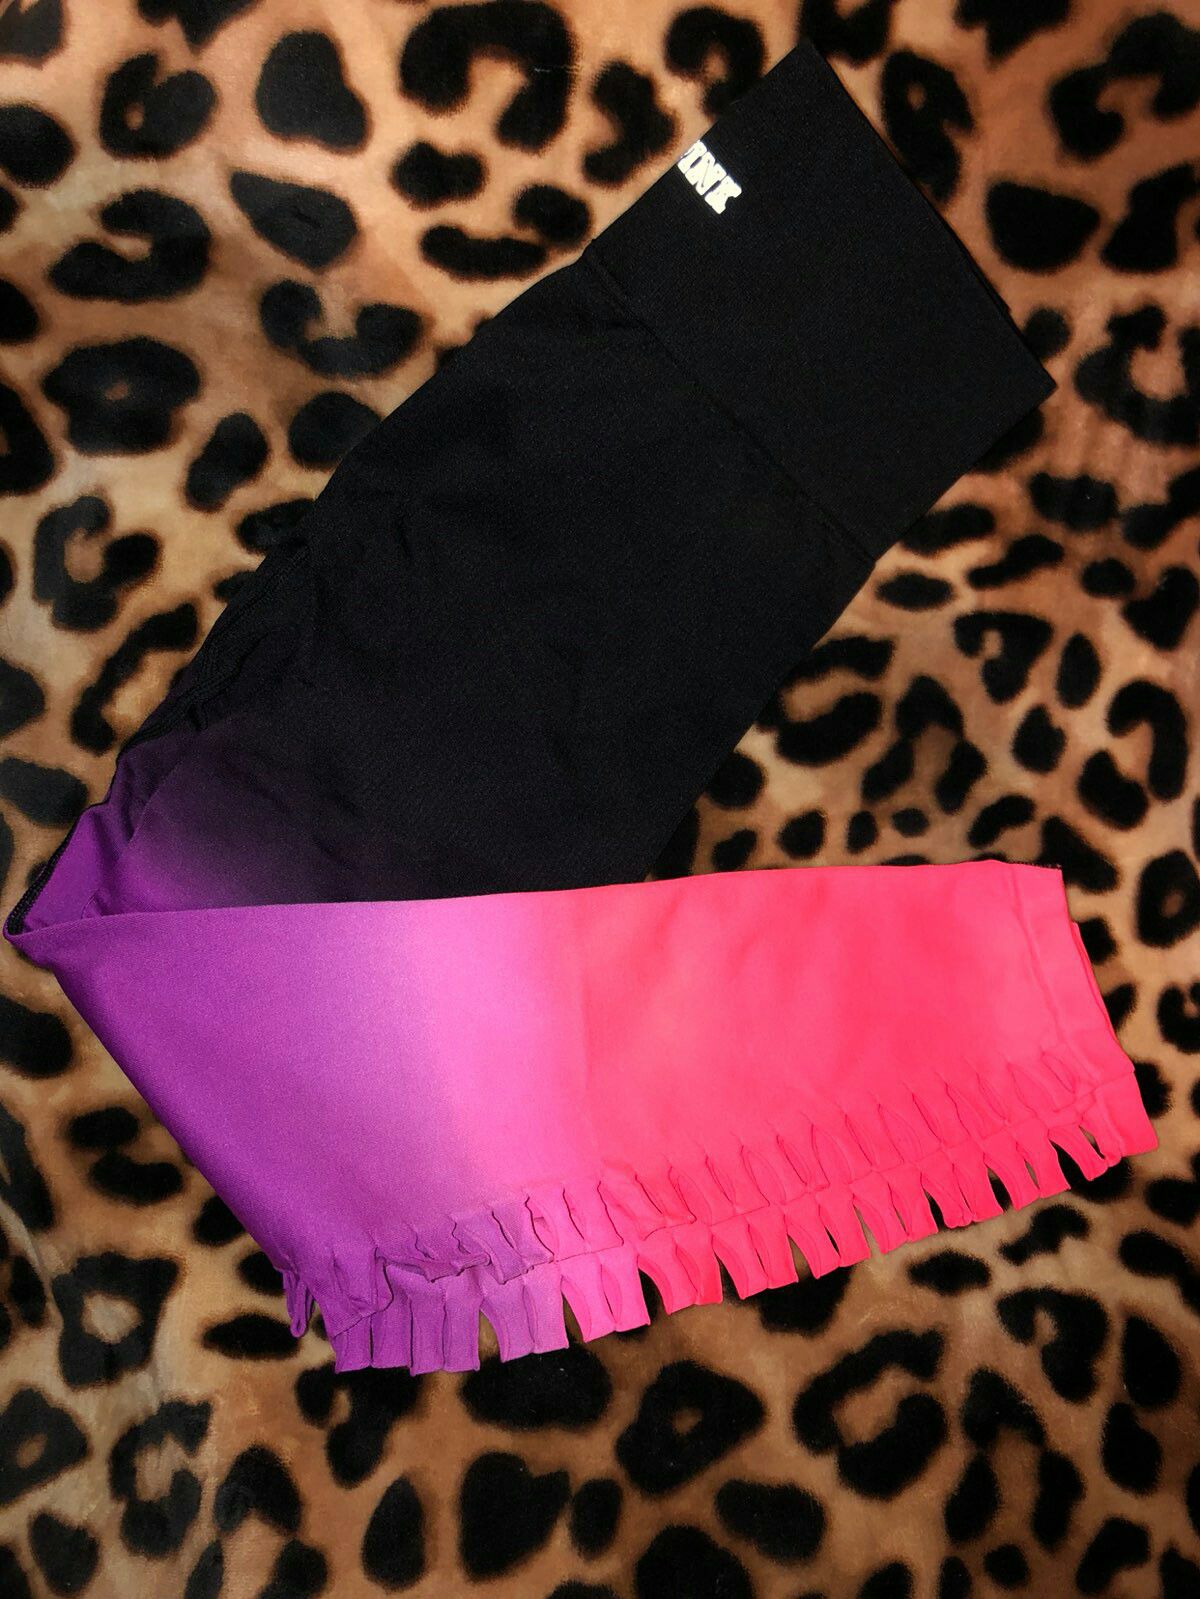 New Victoria's Secret Pink ombre pink. purple, black strappy leggings size  medium for Sale in Brea, CA - OfferUp